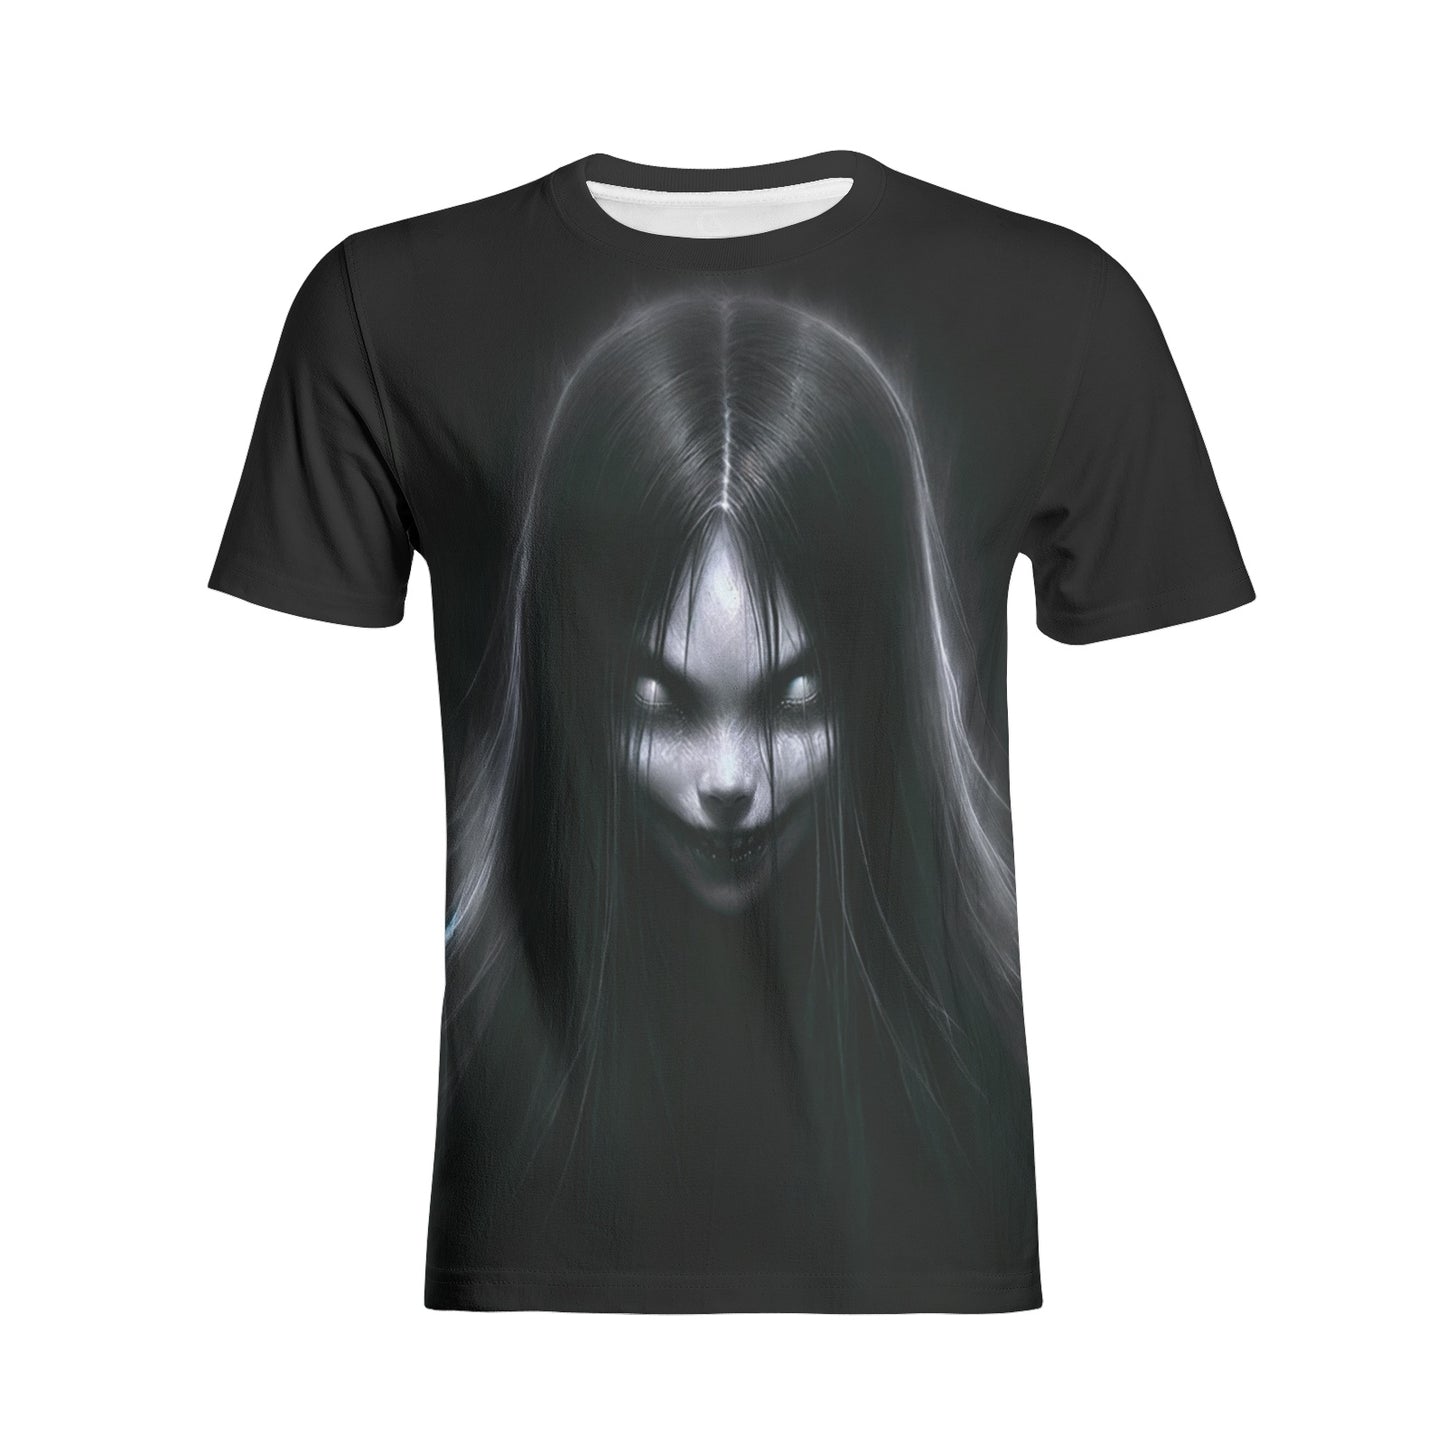 Yūrei Reveal Tee - Unisex Cotton T-Shirt with Vengeful Spirit Print